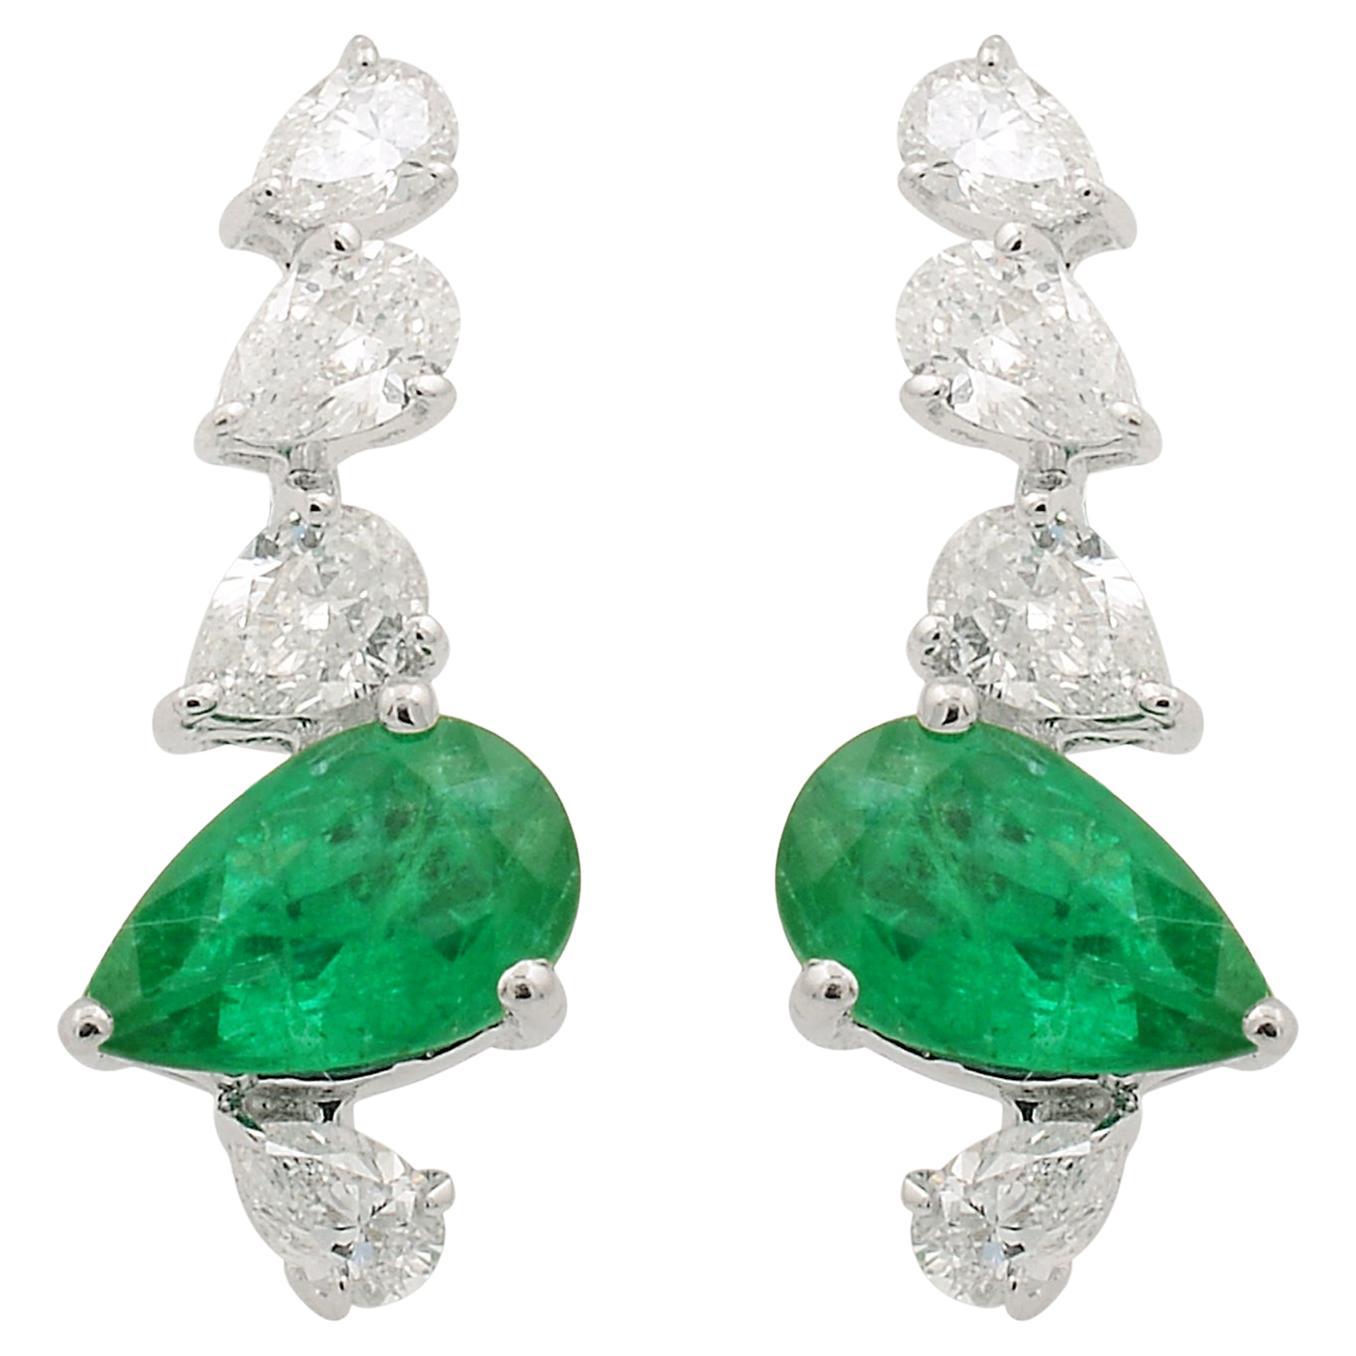 Pear Diamond Stud Earrings Natural Emerald Gemstone 14k White Gold Fine Jewelry